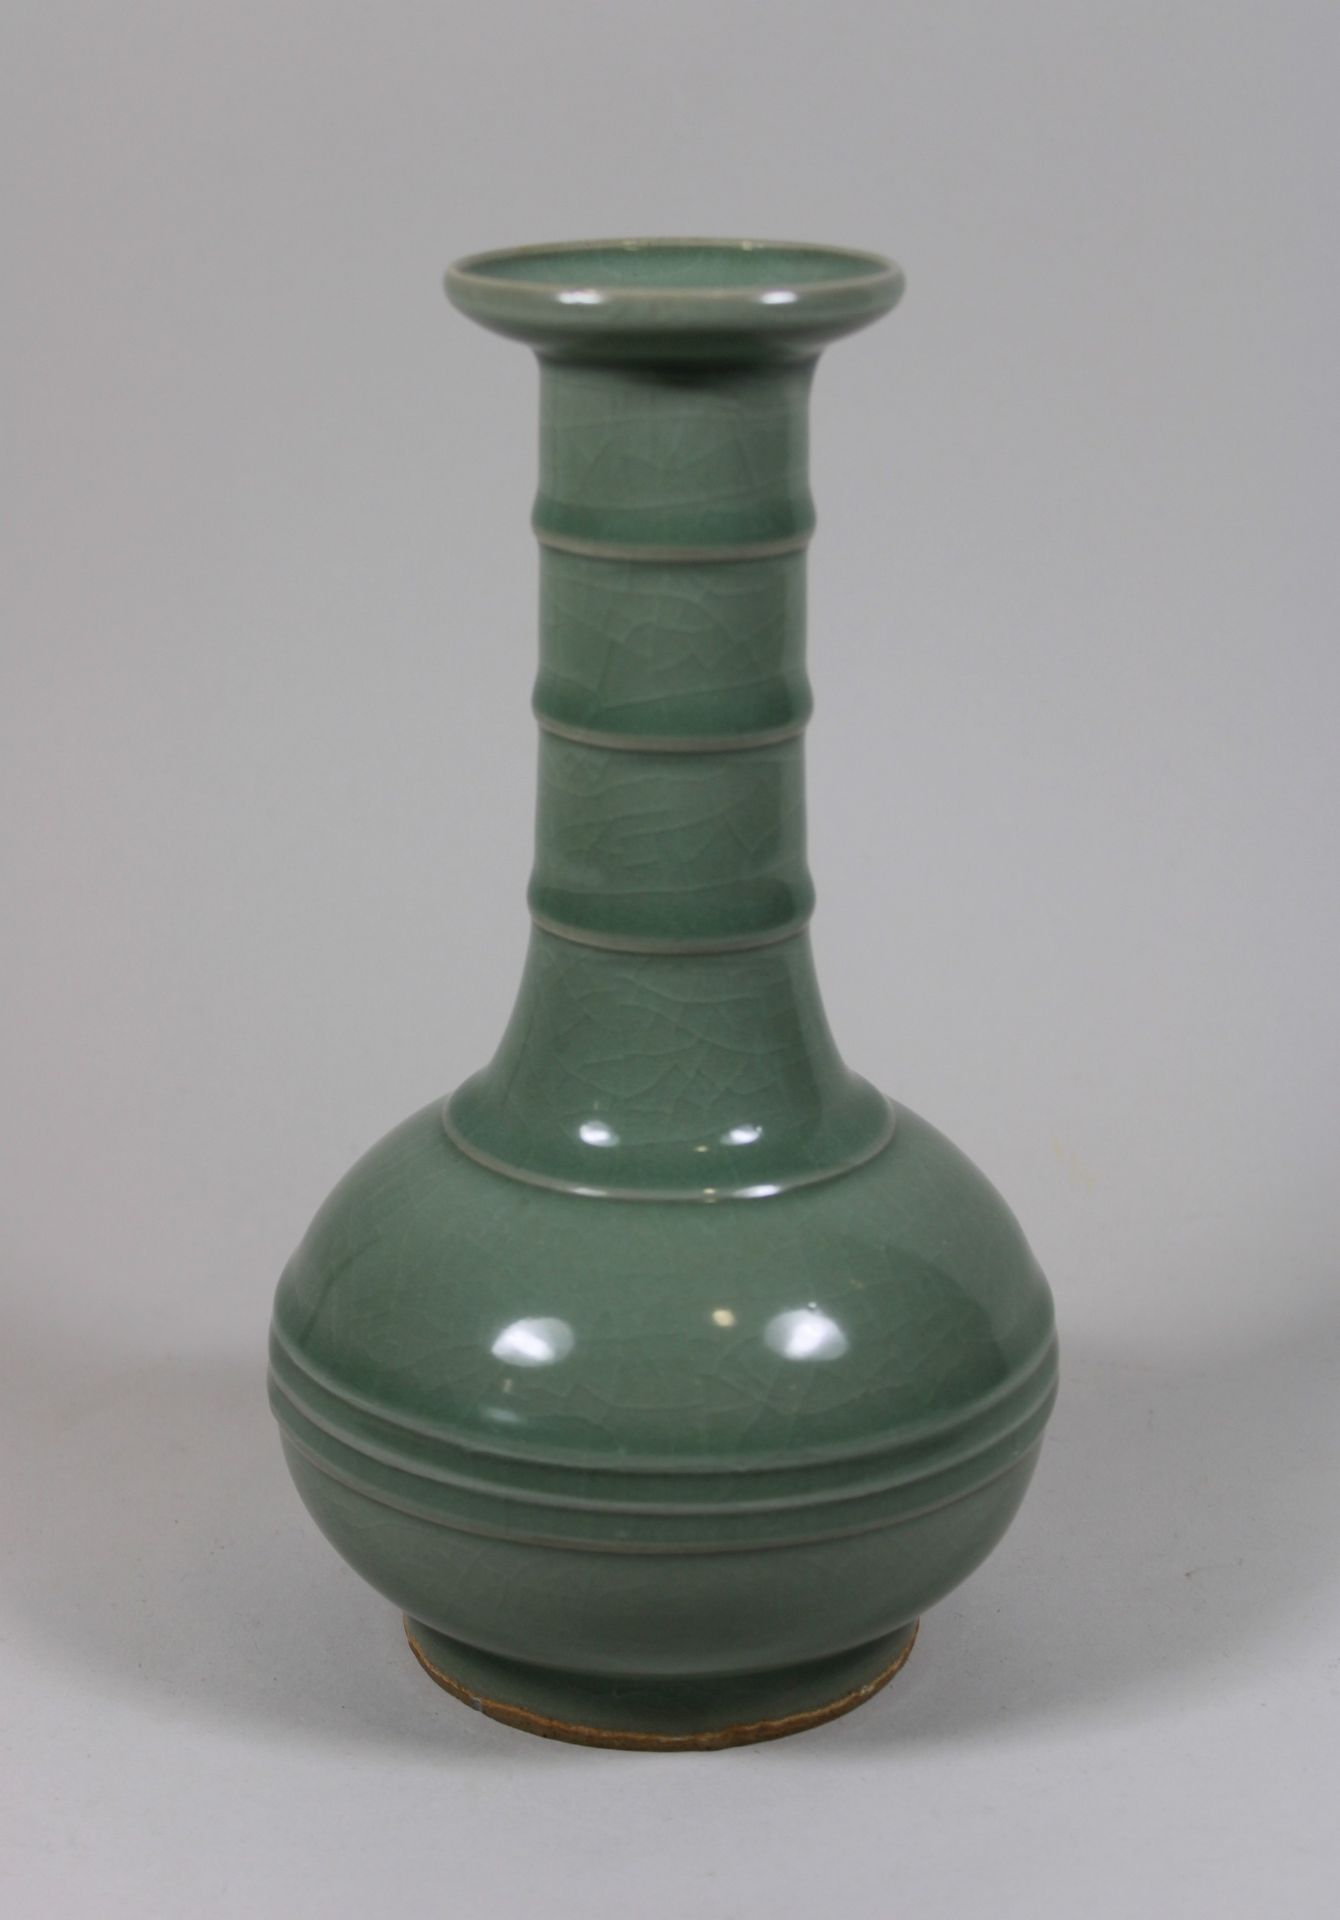 Vase, China, Porzellan, wohl 19/20. Jh., Longquan Seladon. H.: 23 cm. Guter, altersbedingter